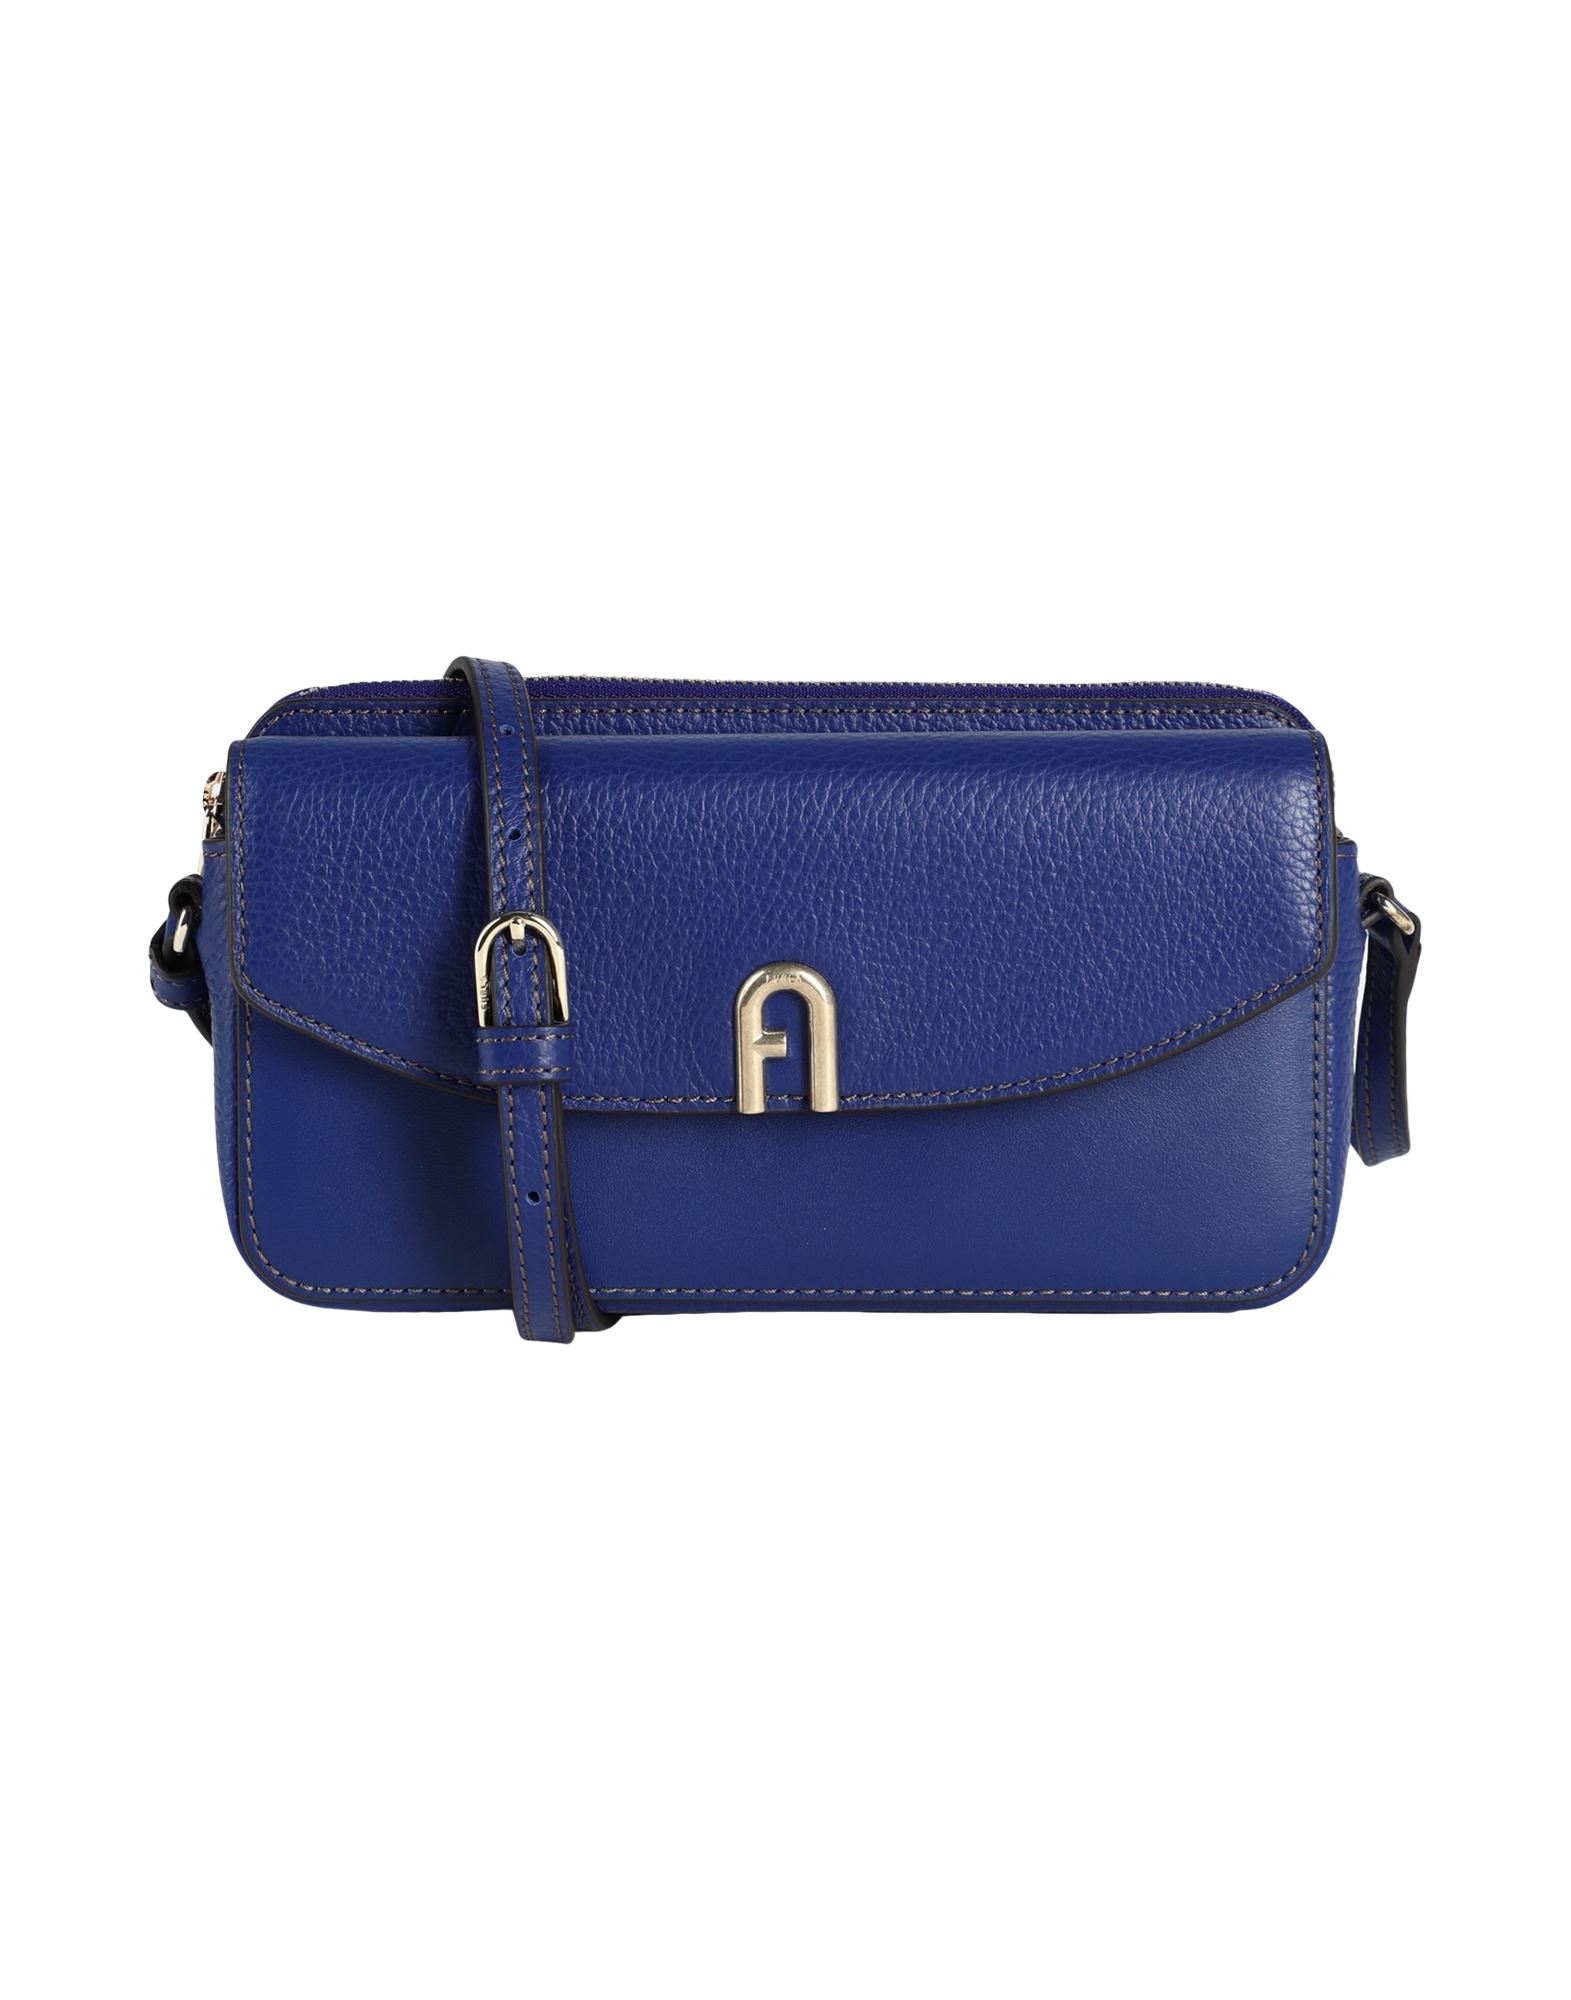 Furla Handbags In Bright Blue